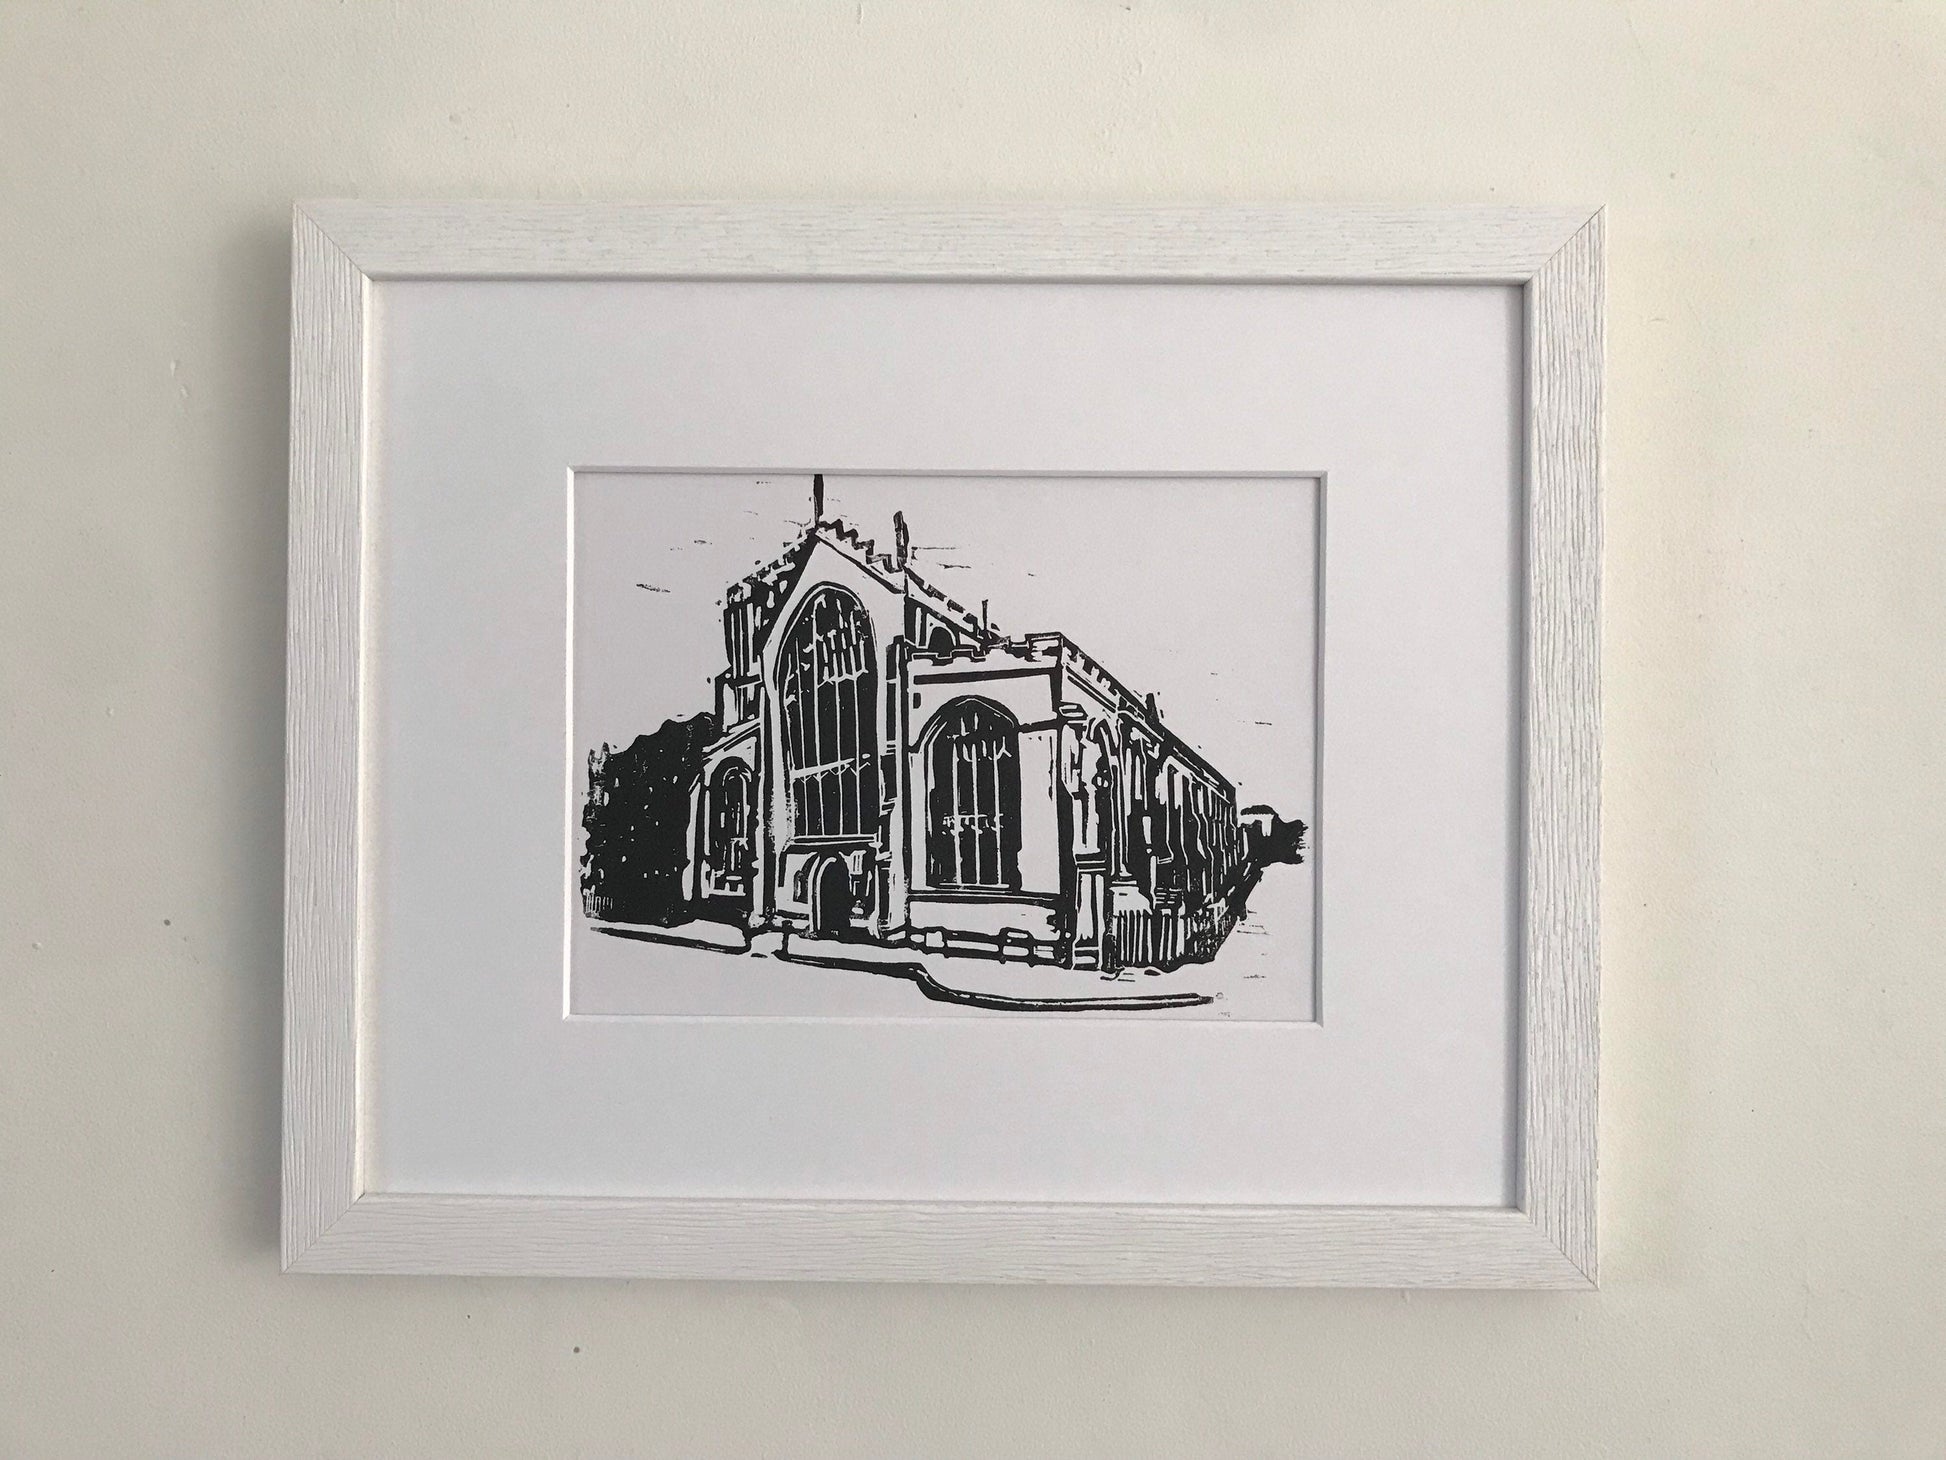 St Mary’s Church, Bury St Edmunds. Original Linocut Print by The Rik Barwick Studio